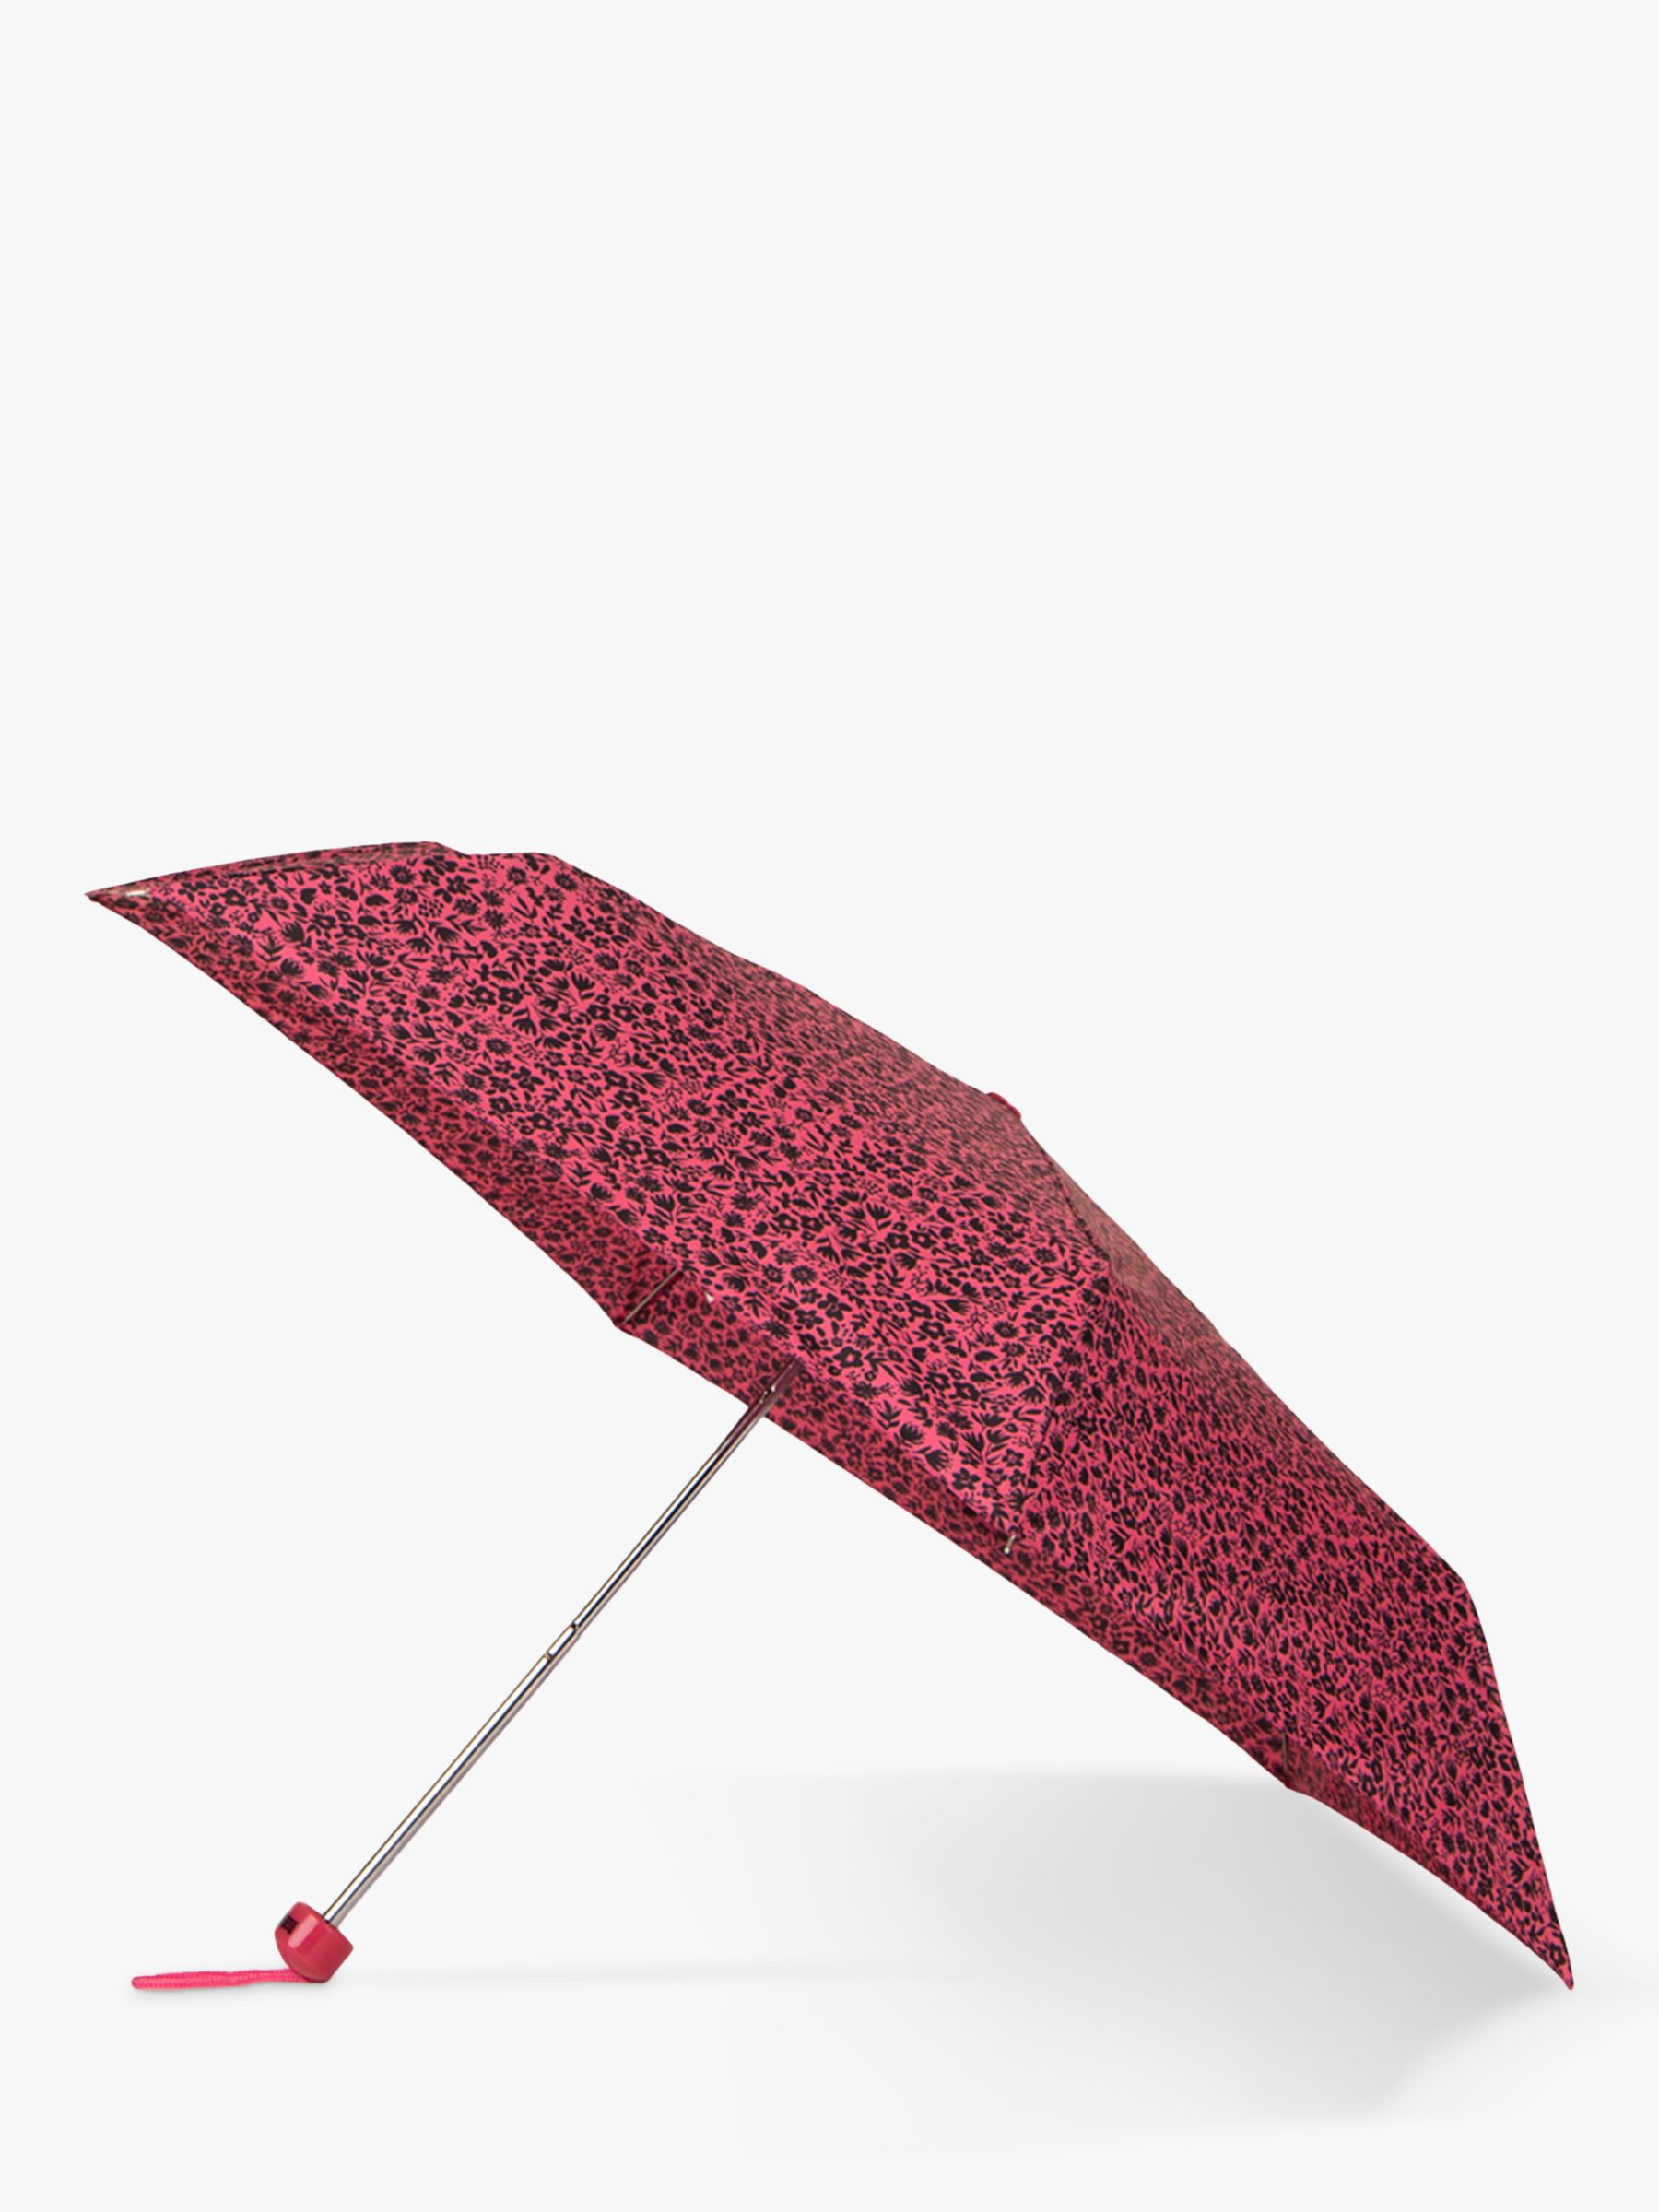 totes Supermini Umbrella and Foldaway Shopper Set, Pink/Black, One Size